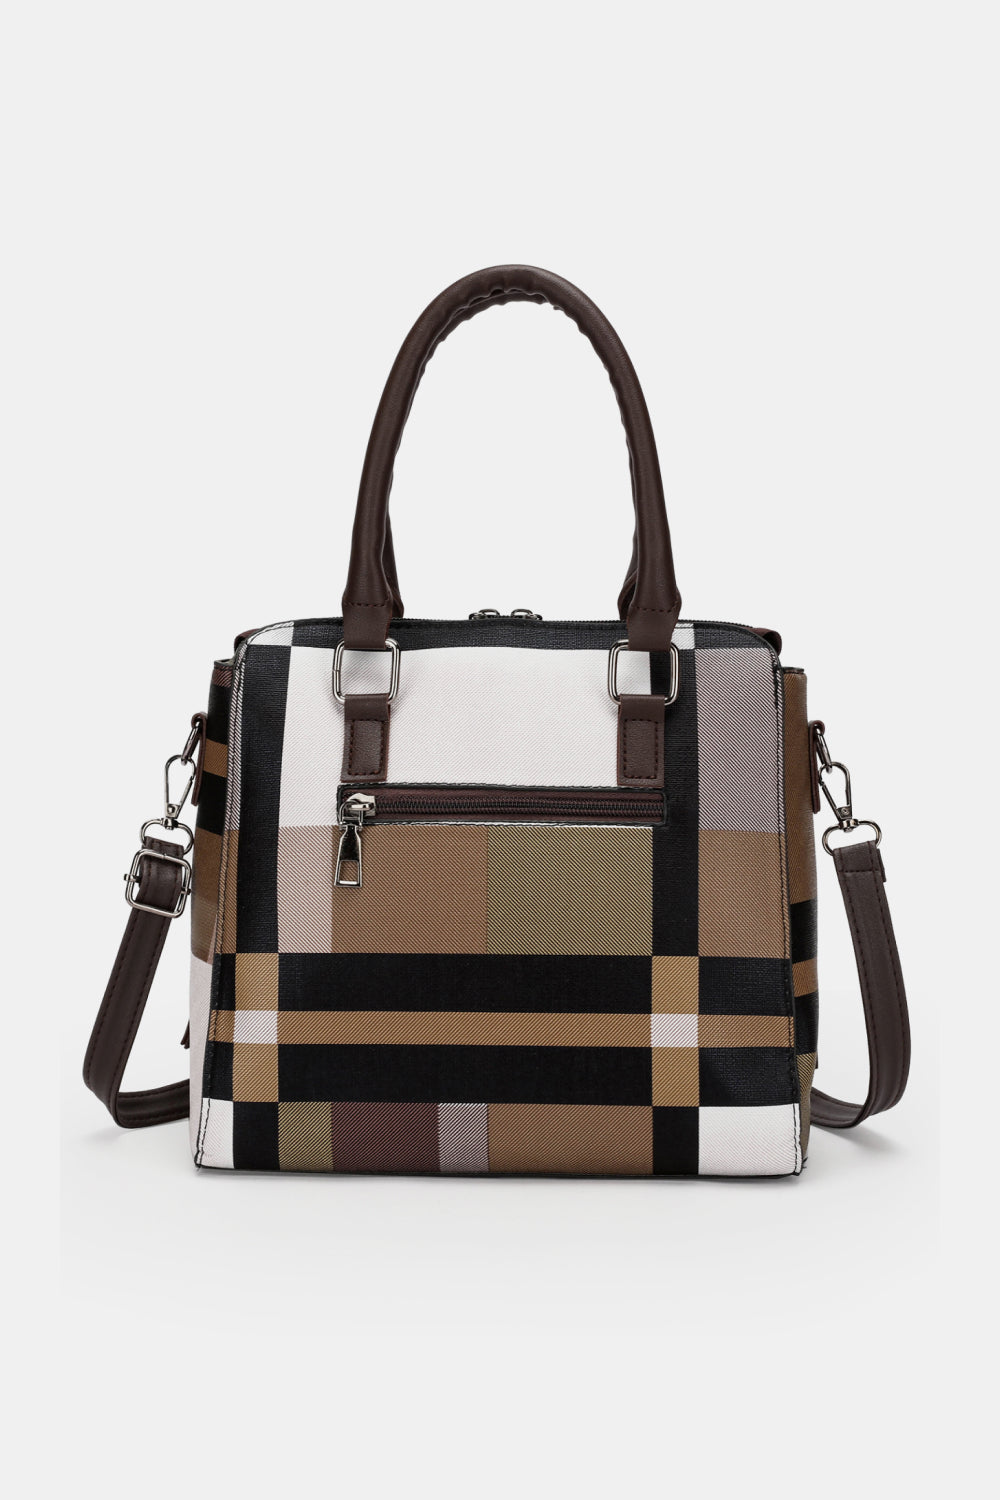 Luxury Handbags plaid Women Bags Designer Purses and Handbags Set 4 Pieces  Bags Female Bolsa Feminina